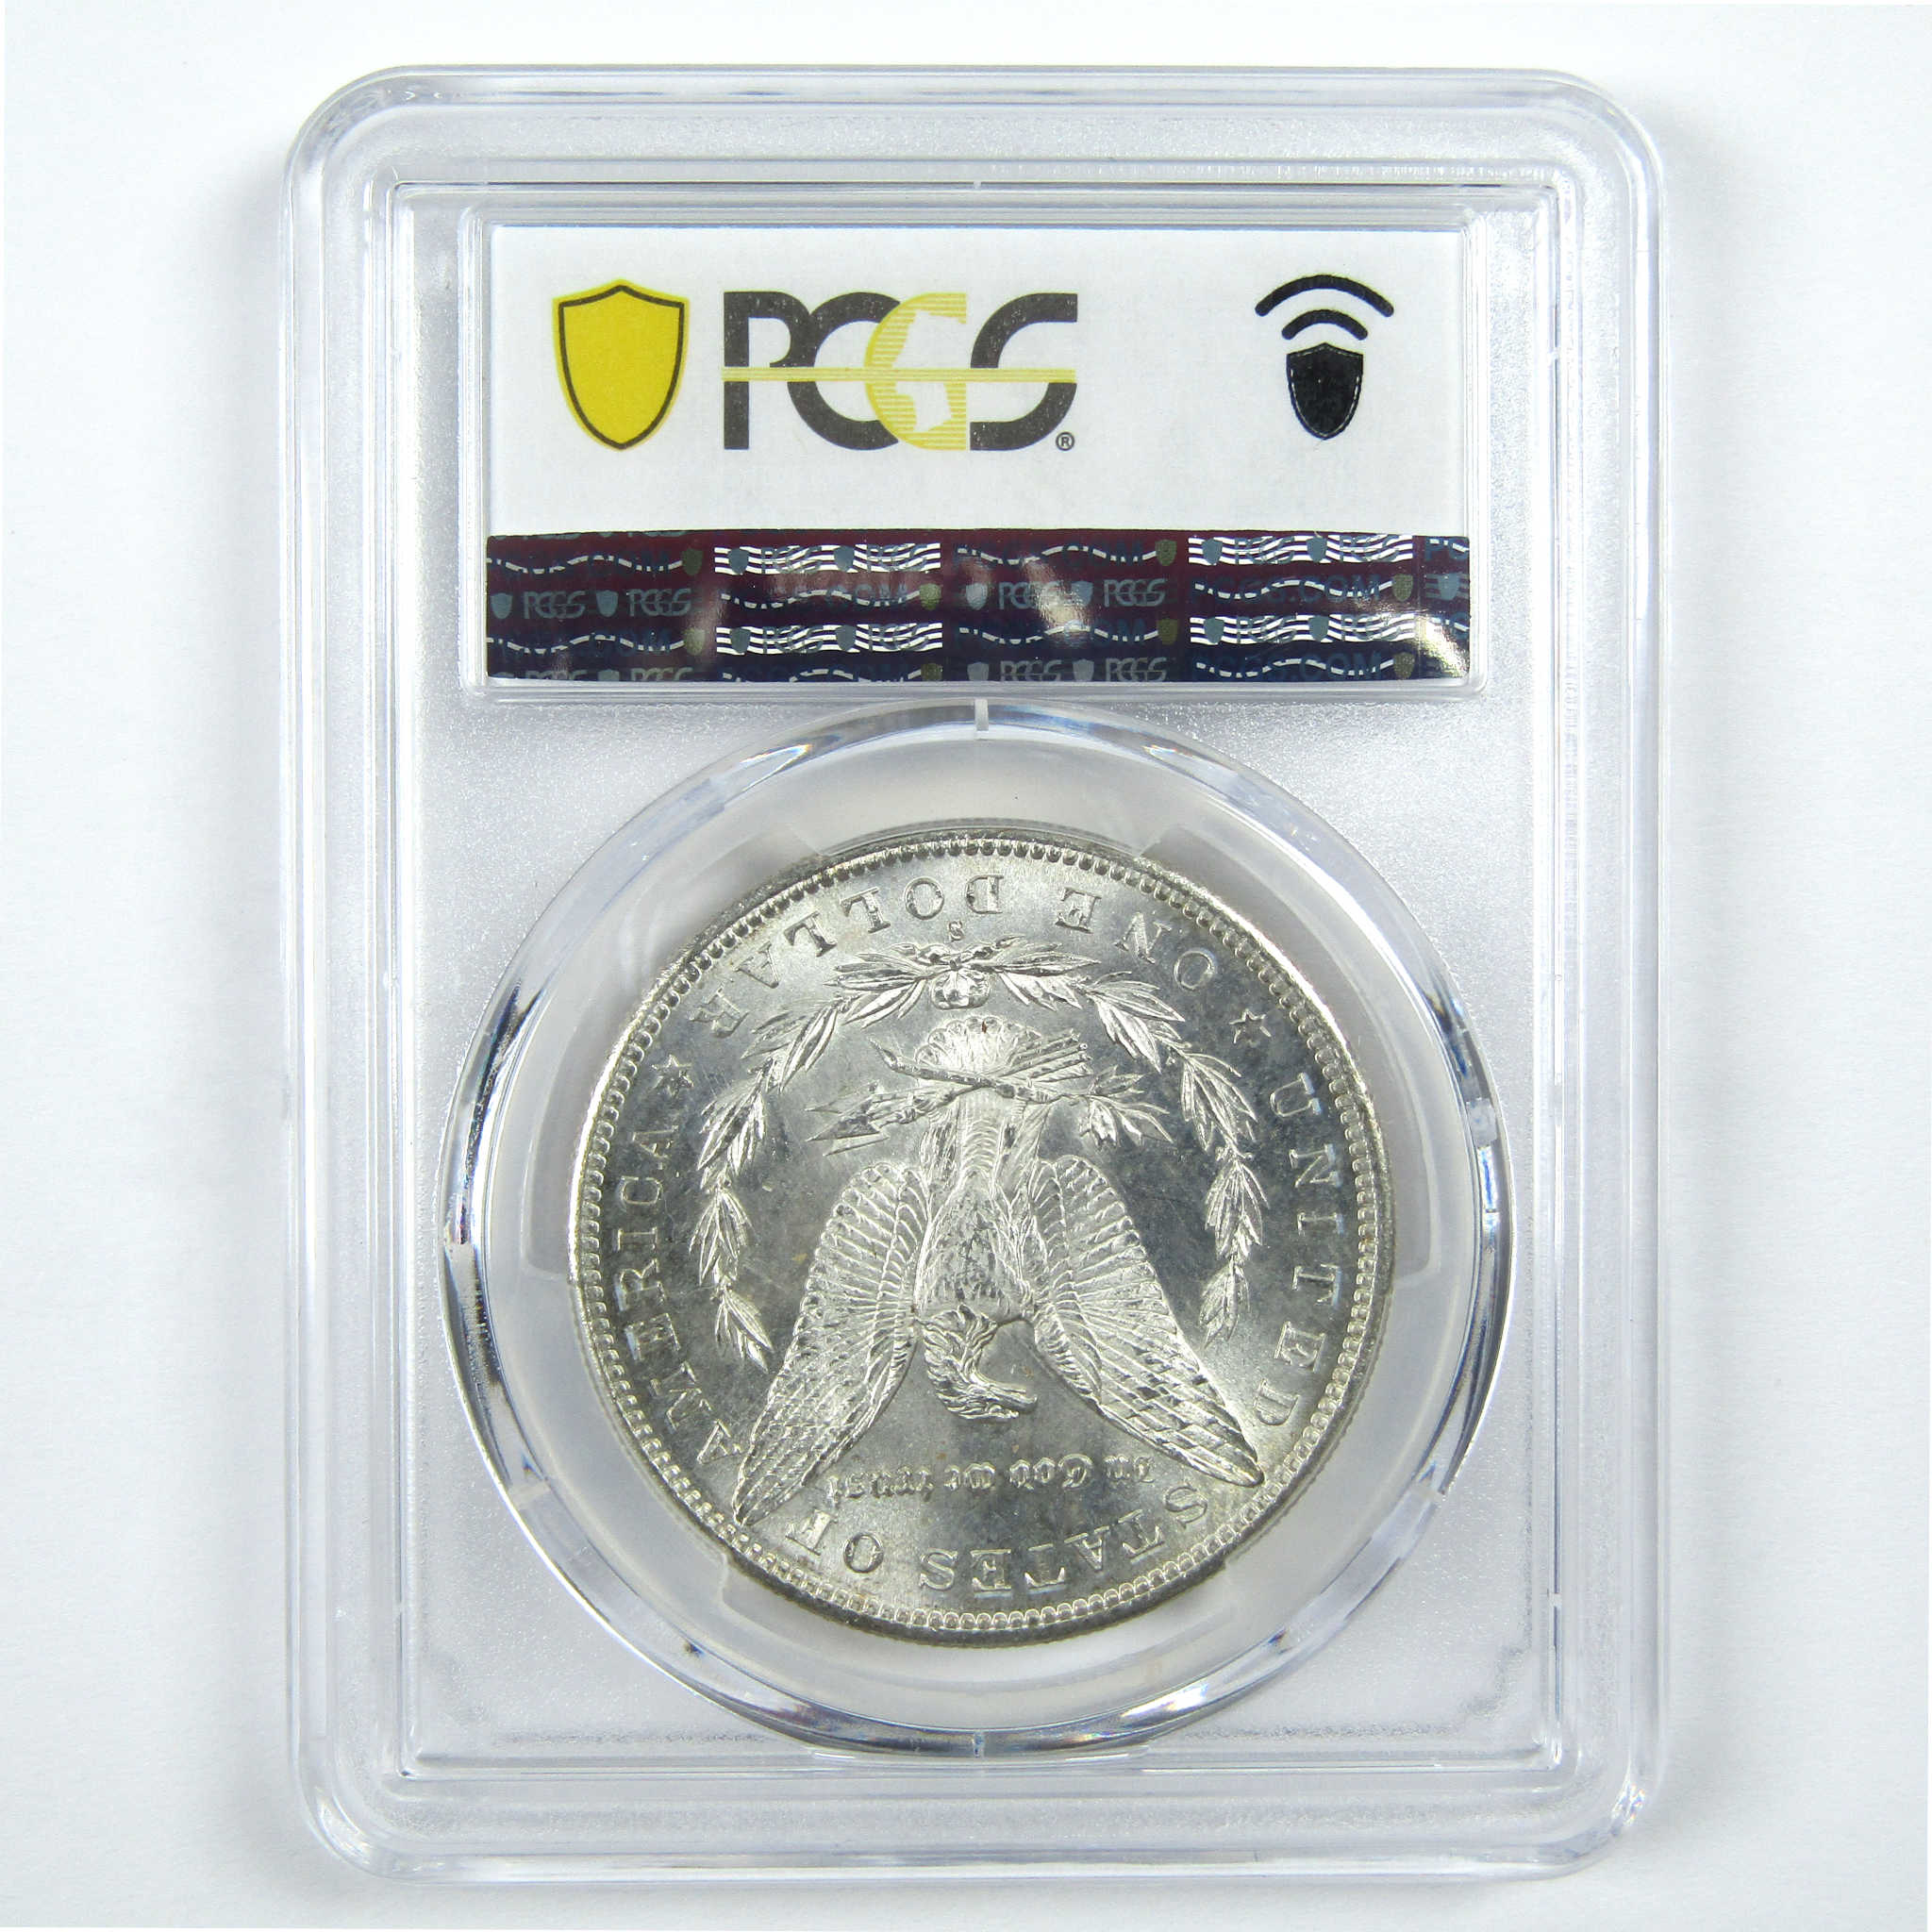 1886 S Morgan Dollar MS 61 PCGS Silver $1 Uncirculated Coin SKU:I13386